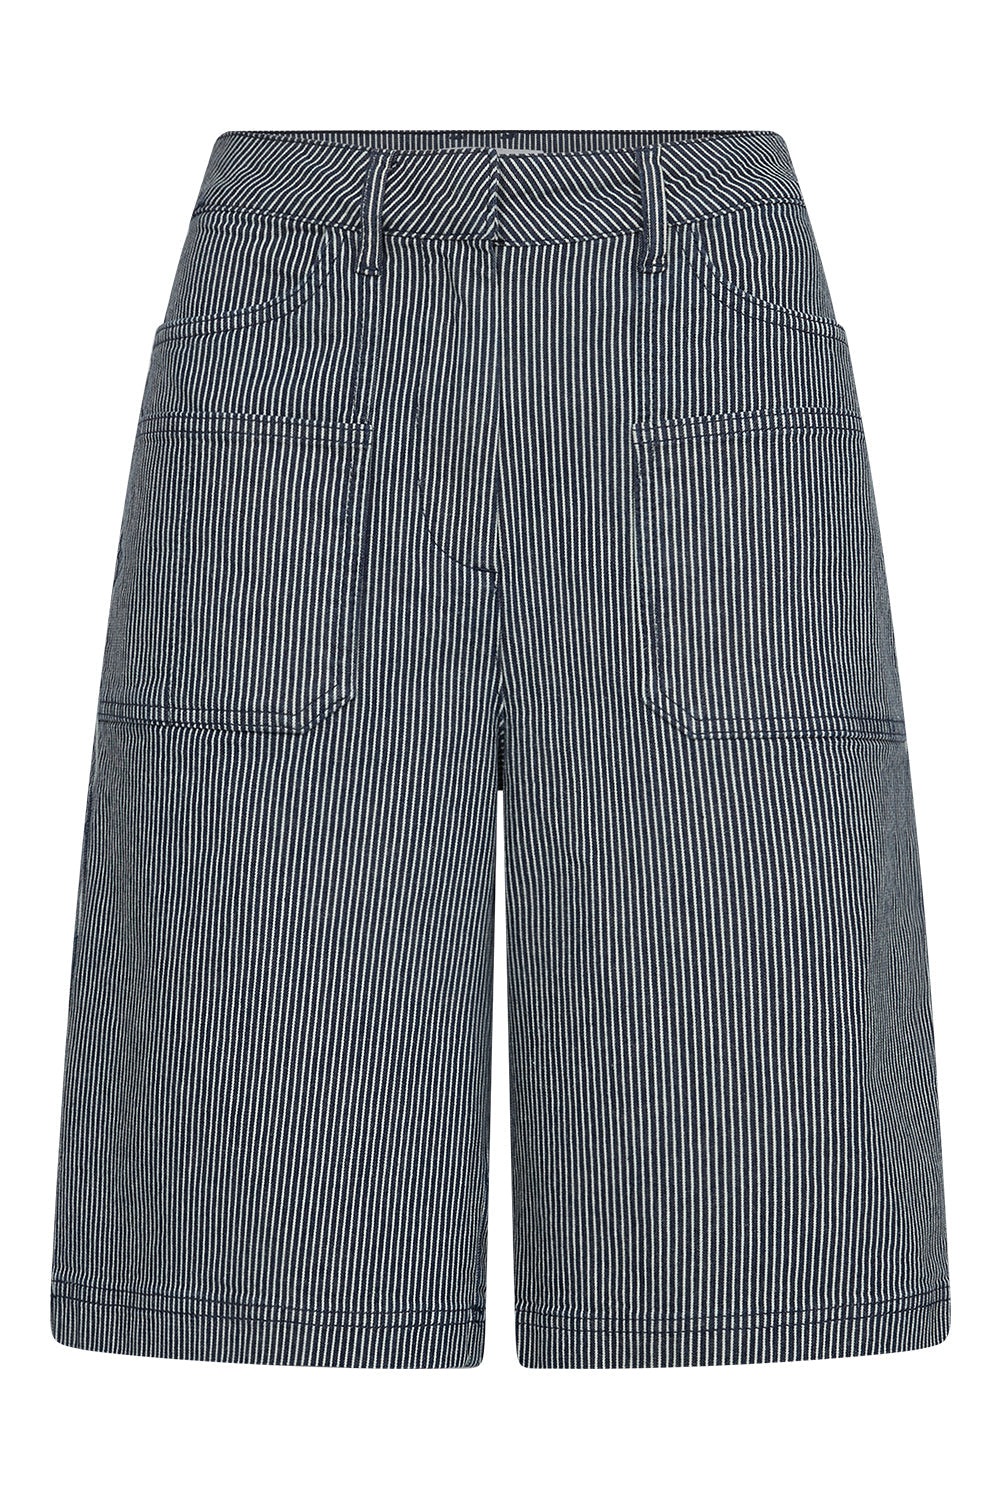 IVY Copenhagen | Shorts | Brooke Worker Sailor Stripe, striped